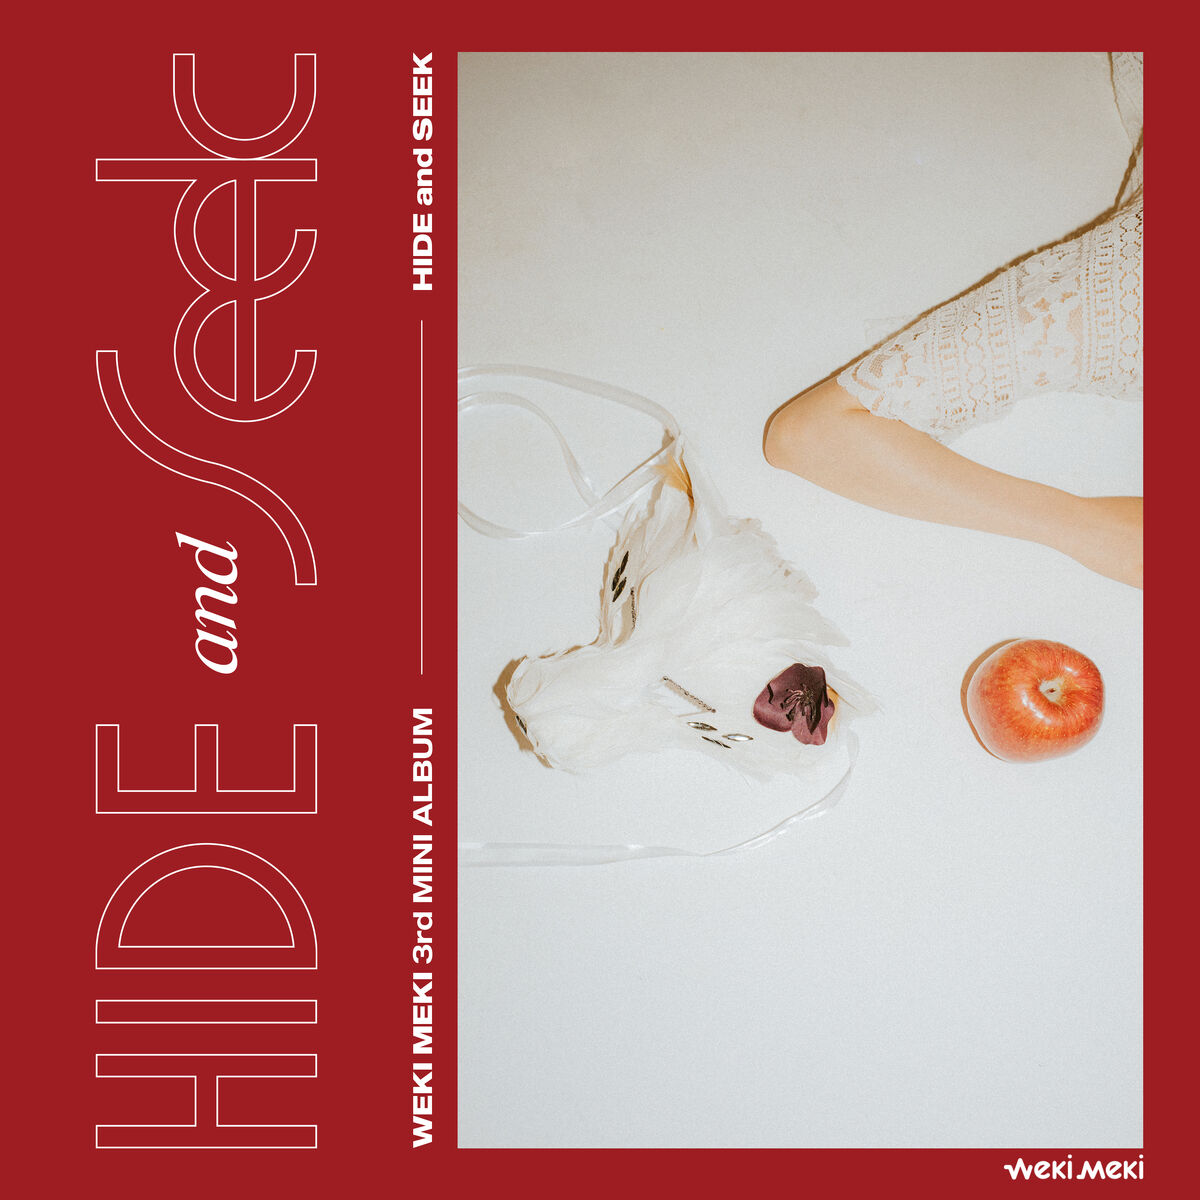 Hide and Seek (Cinematic Version) [feat. Dysergy] - Single - Album